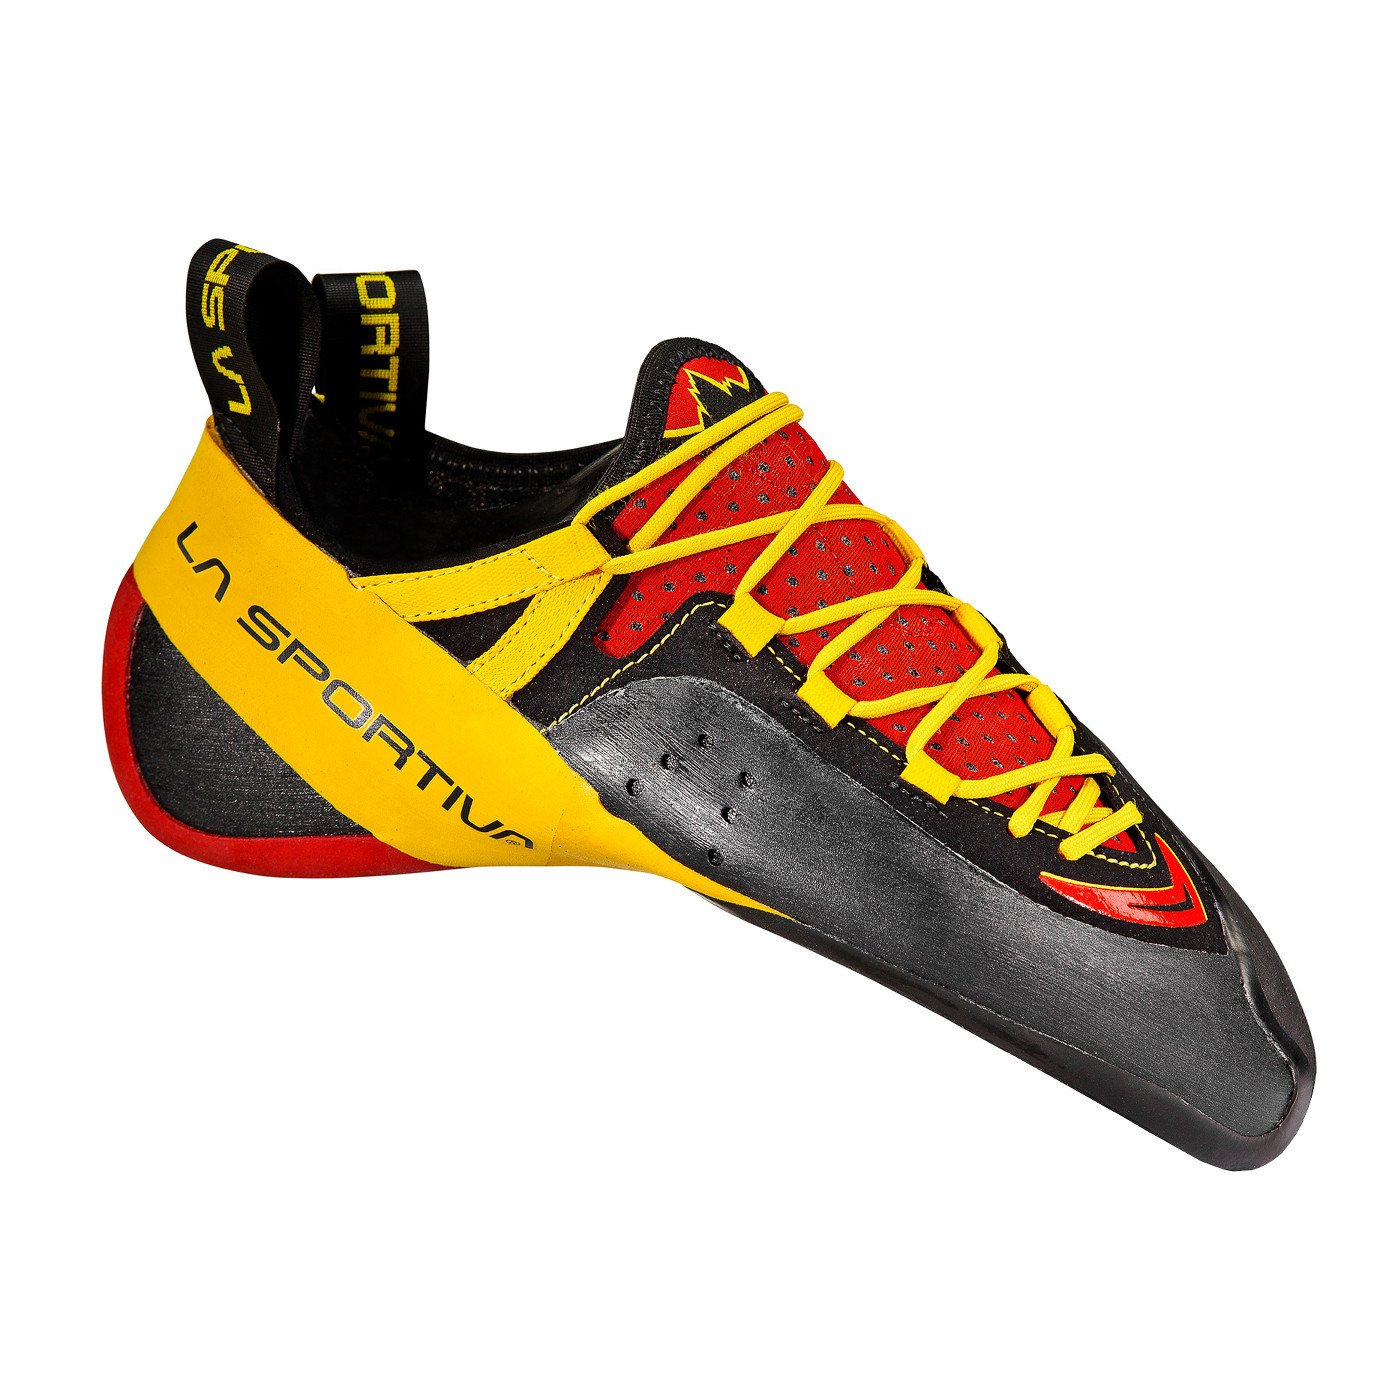 La Sportiva Genius climbing shoe, in black, red and yellow colours